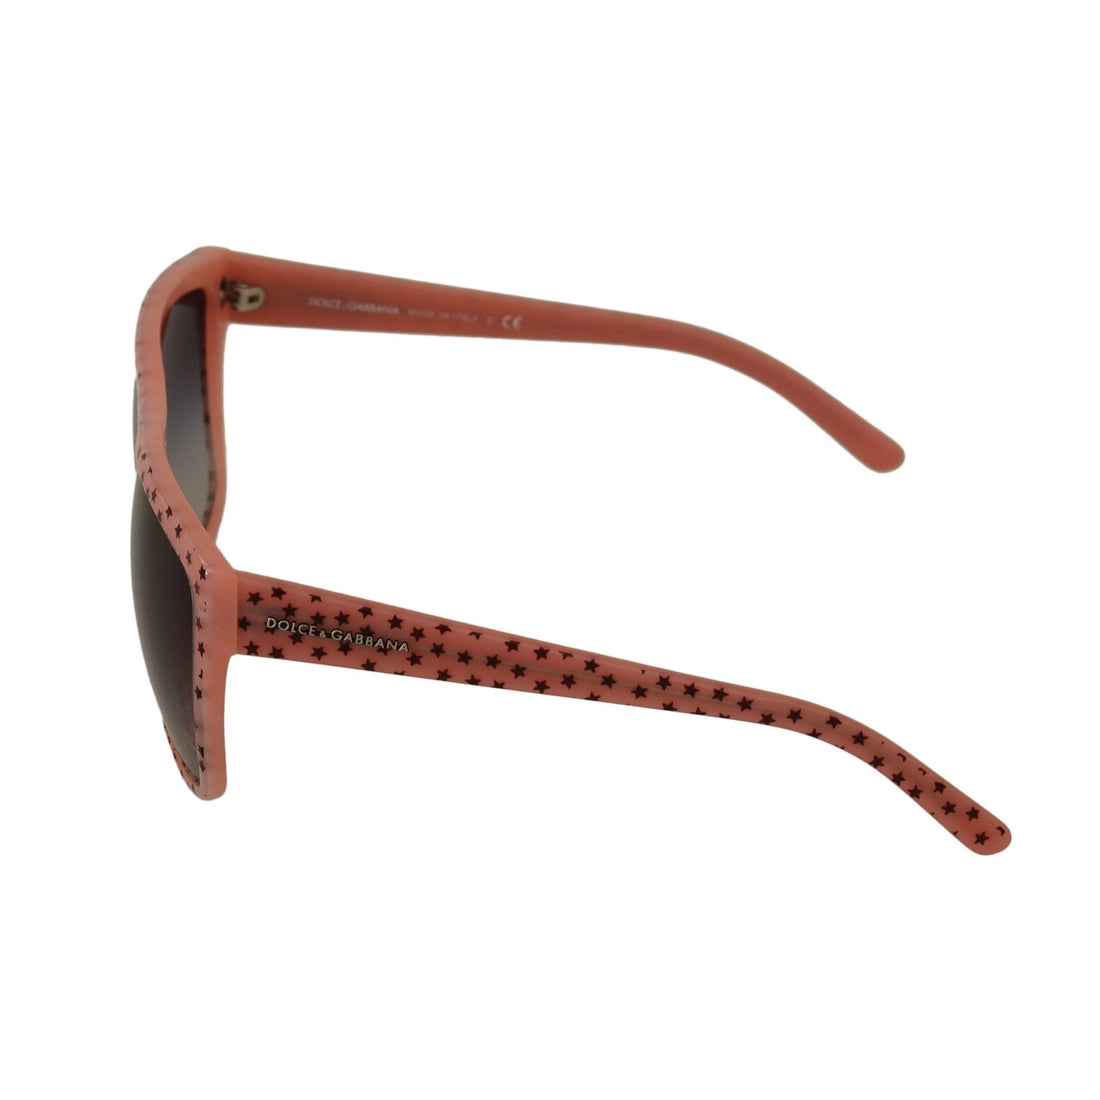 Dolce & Gabbana Brown Stars Acetate Frame Women Shades Sunglasses - Paris Deluxe